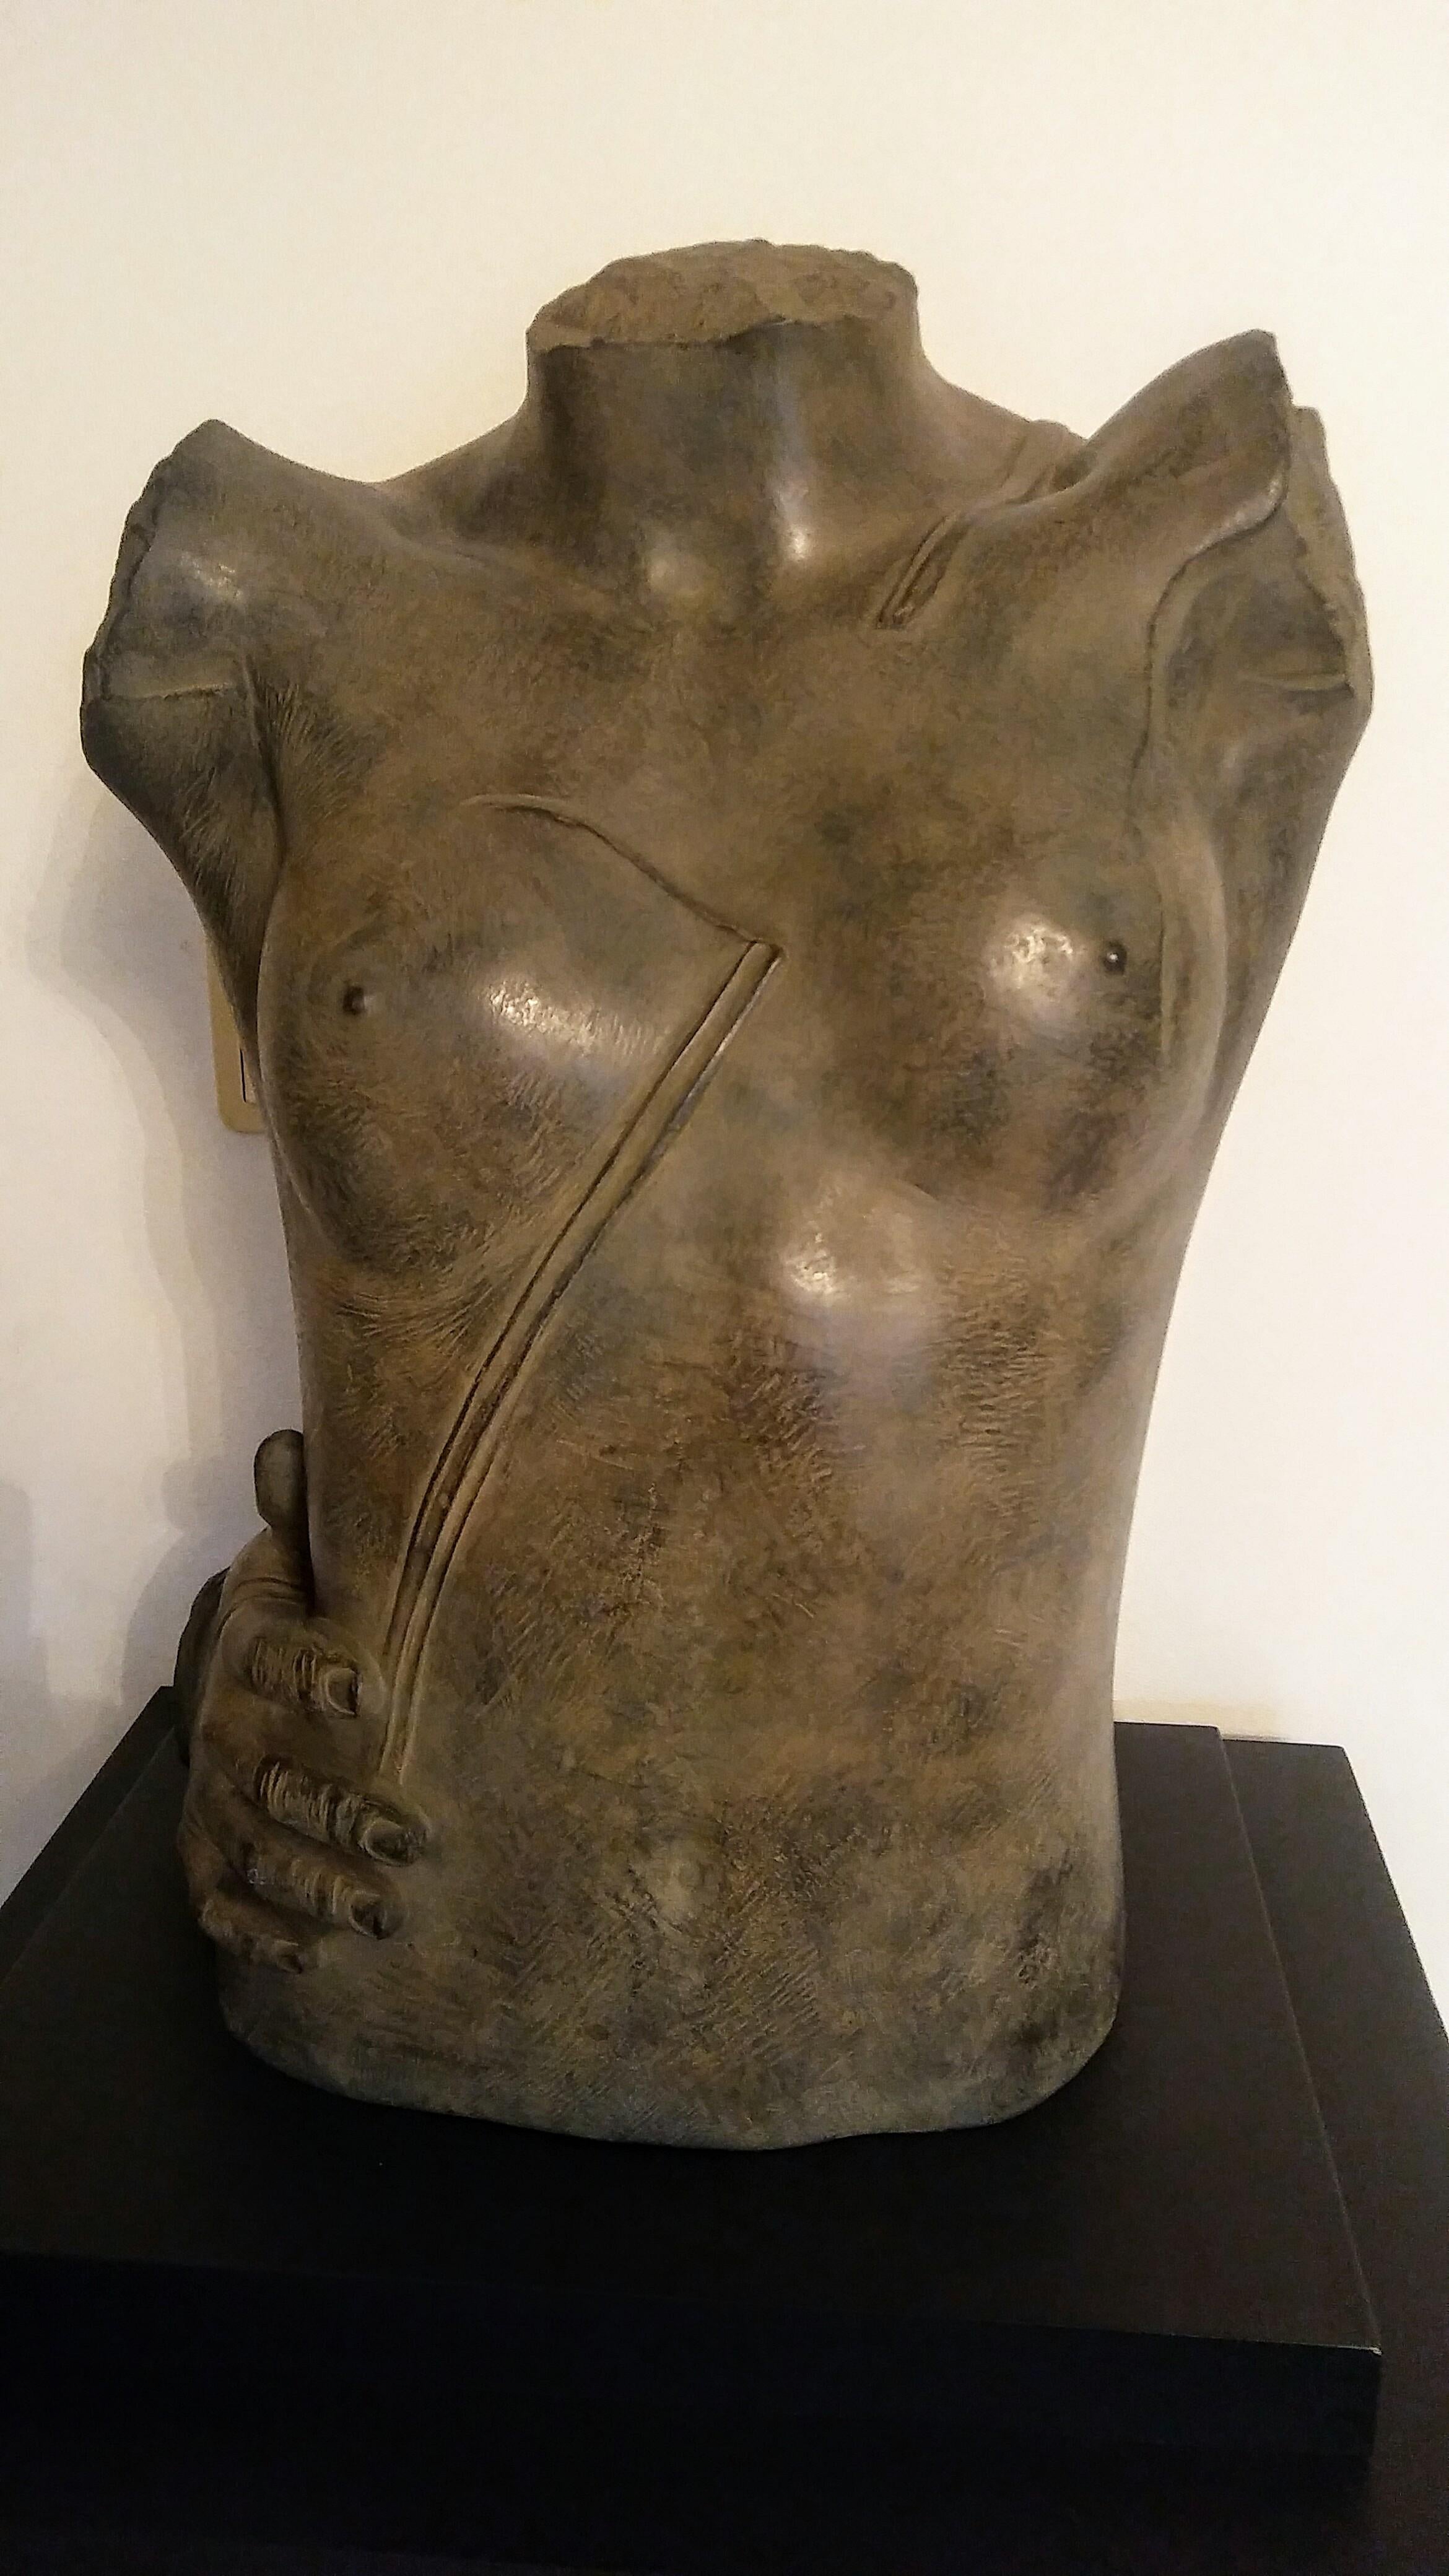 Igor Mitoraj Figurative Sculpture - Untitled 